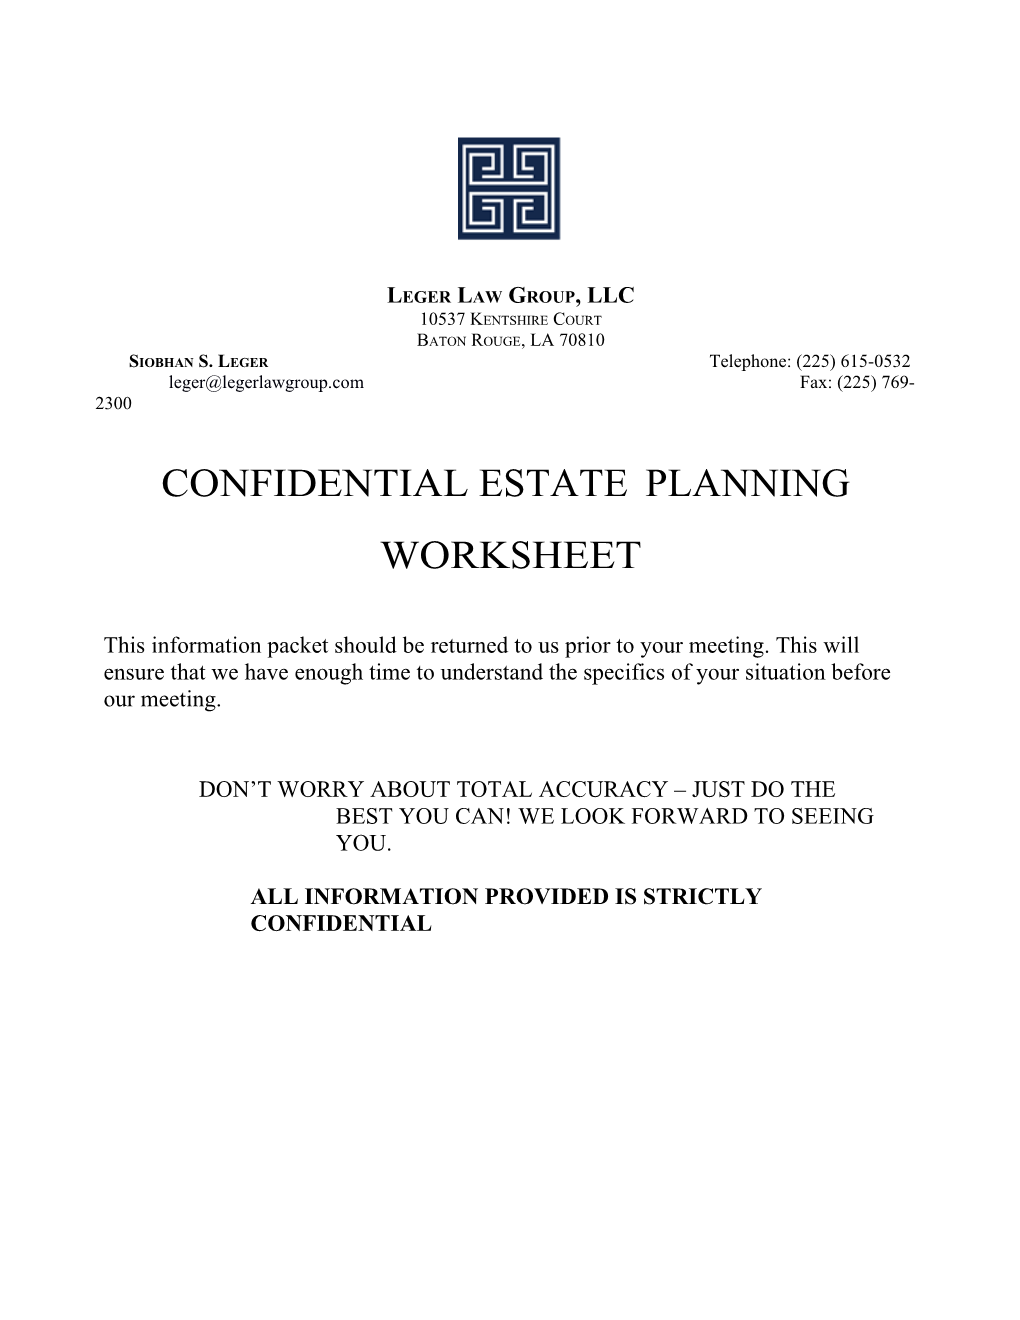 Confidential Estate Planning & Asset Protection Worksheet